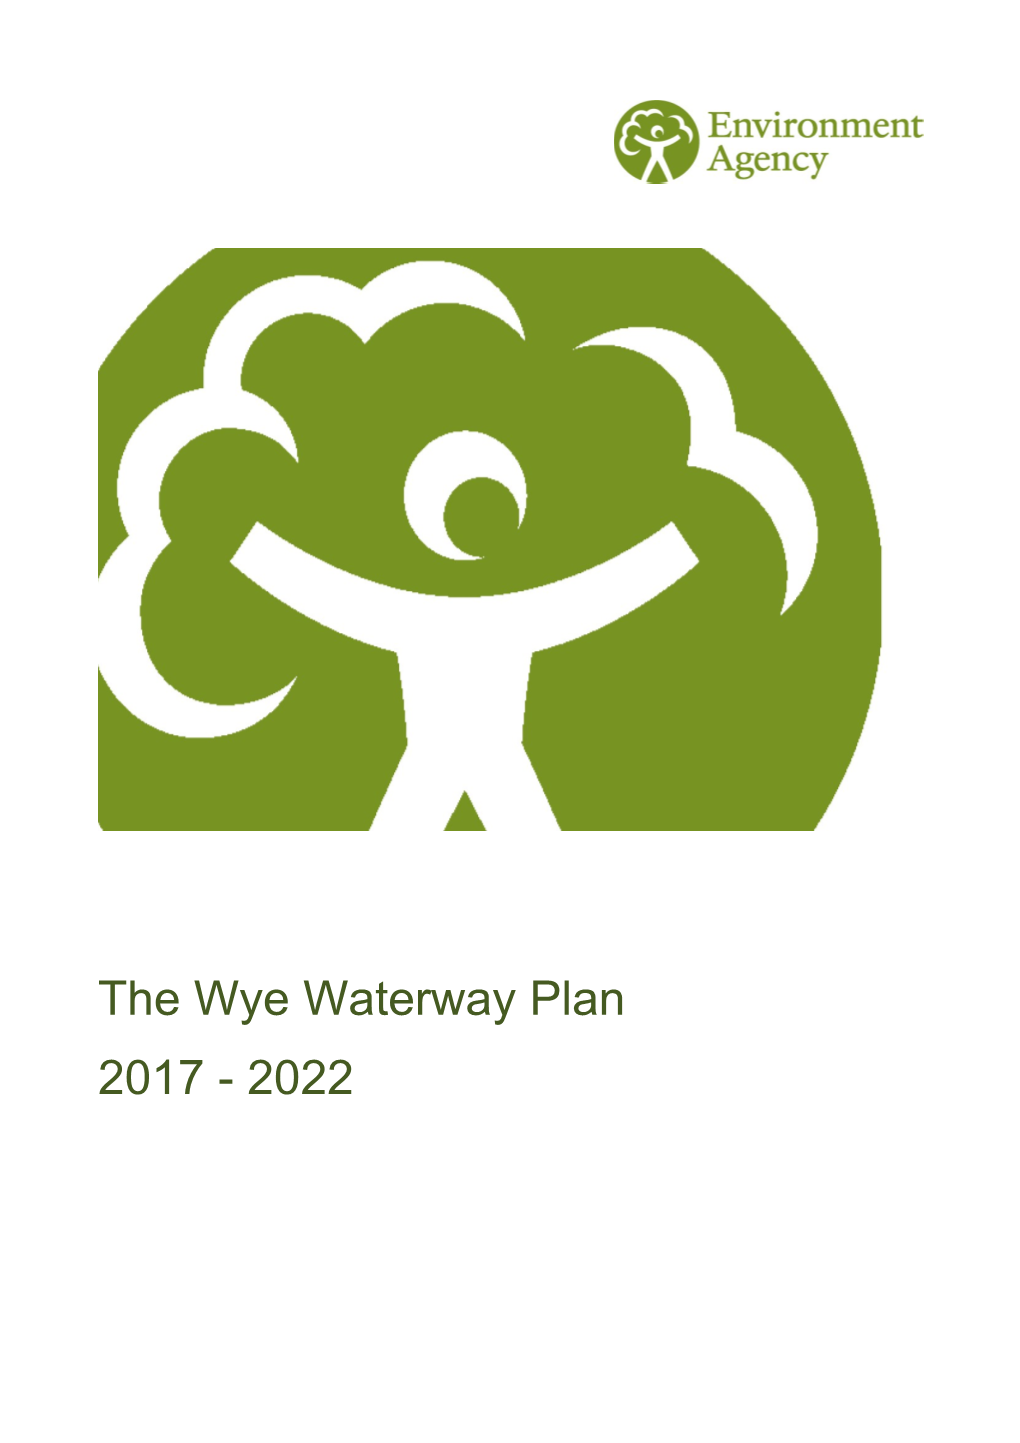 The Wye Waterway Plan